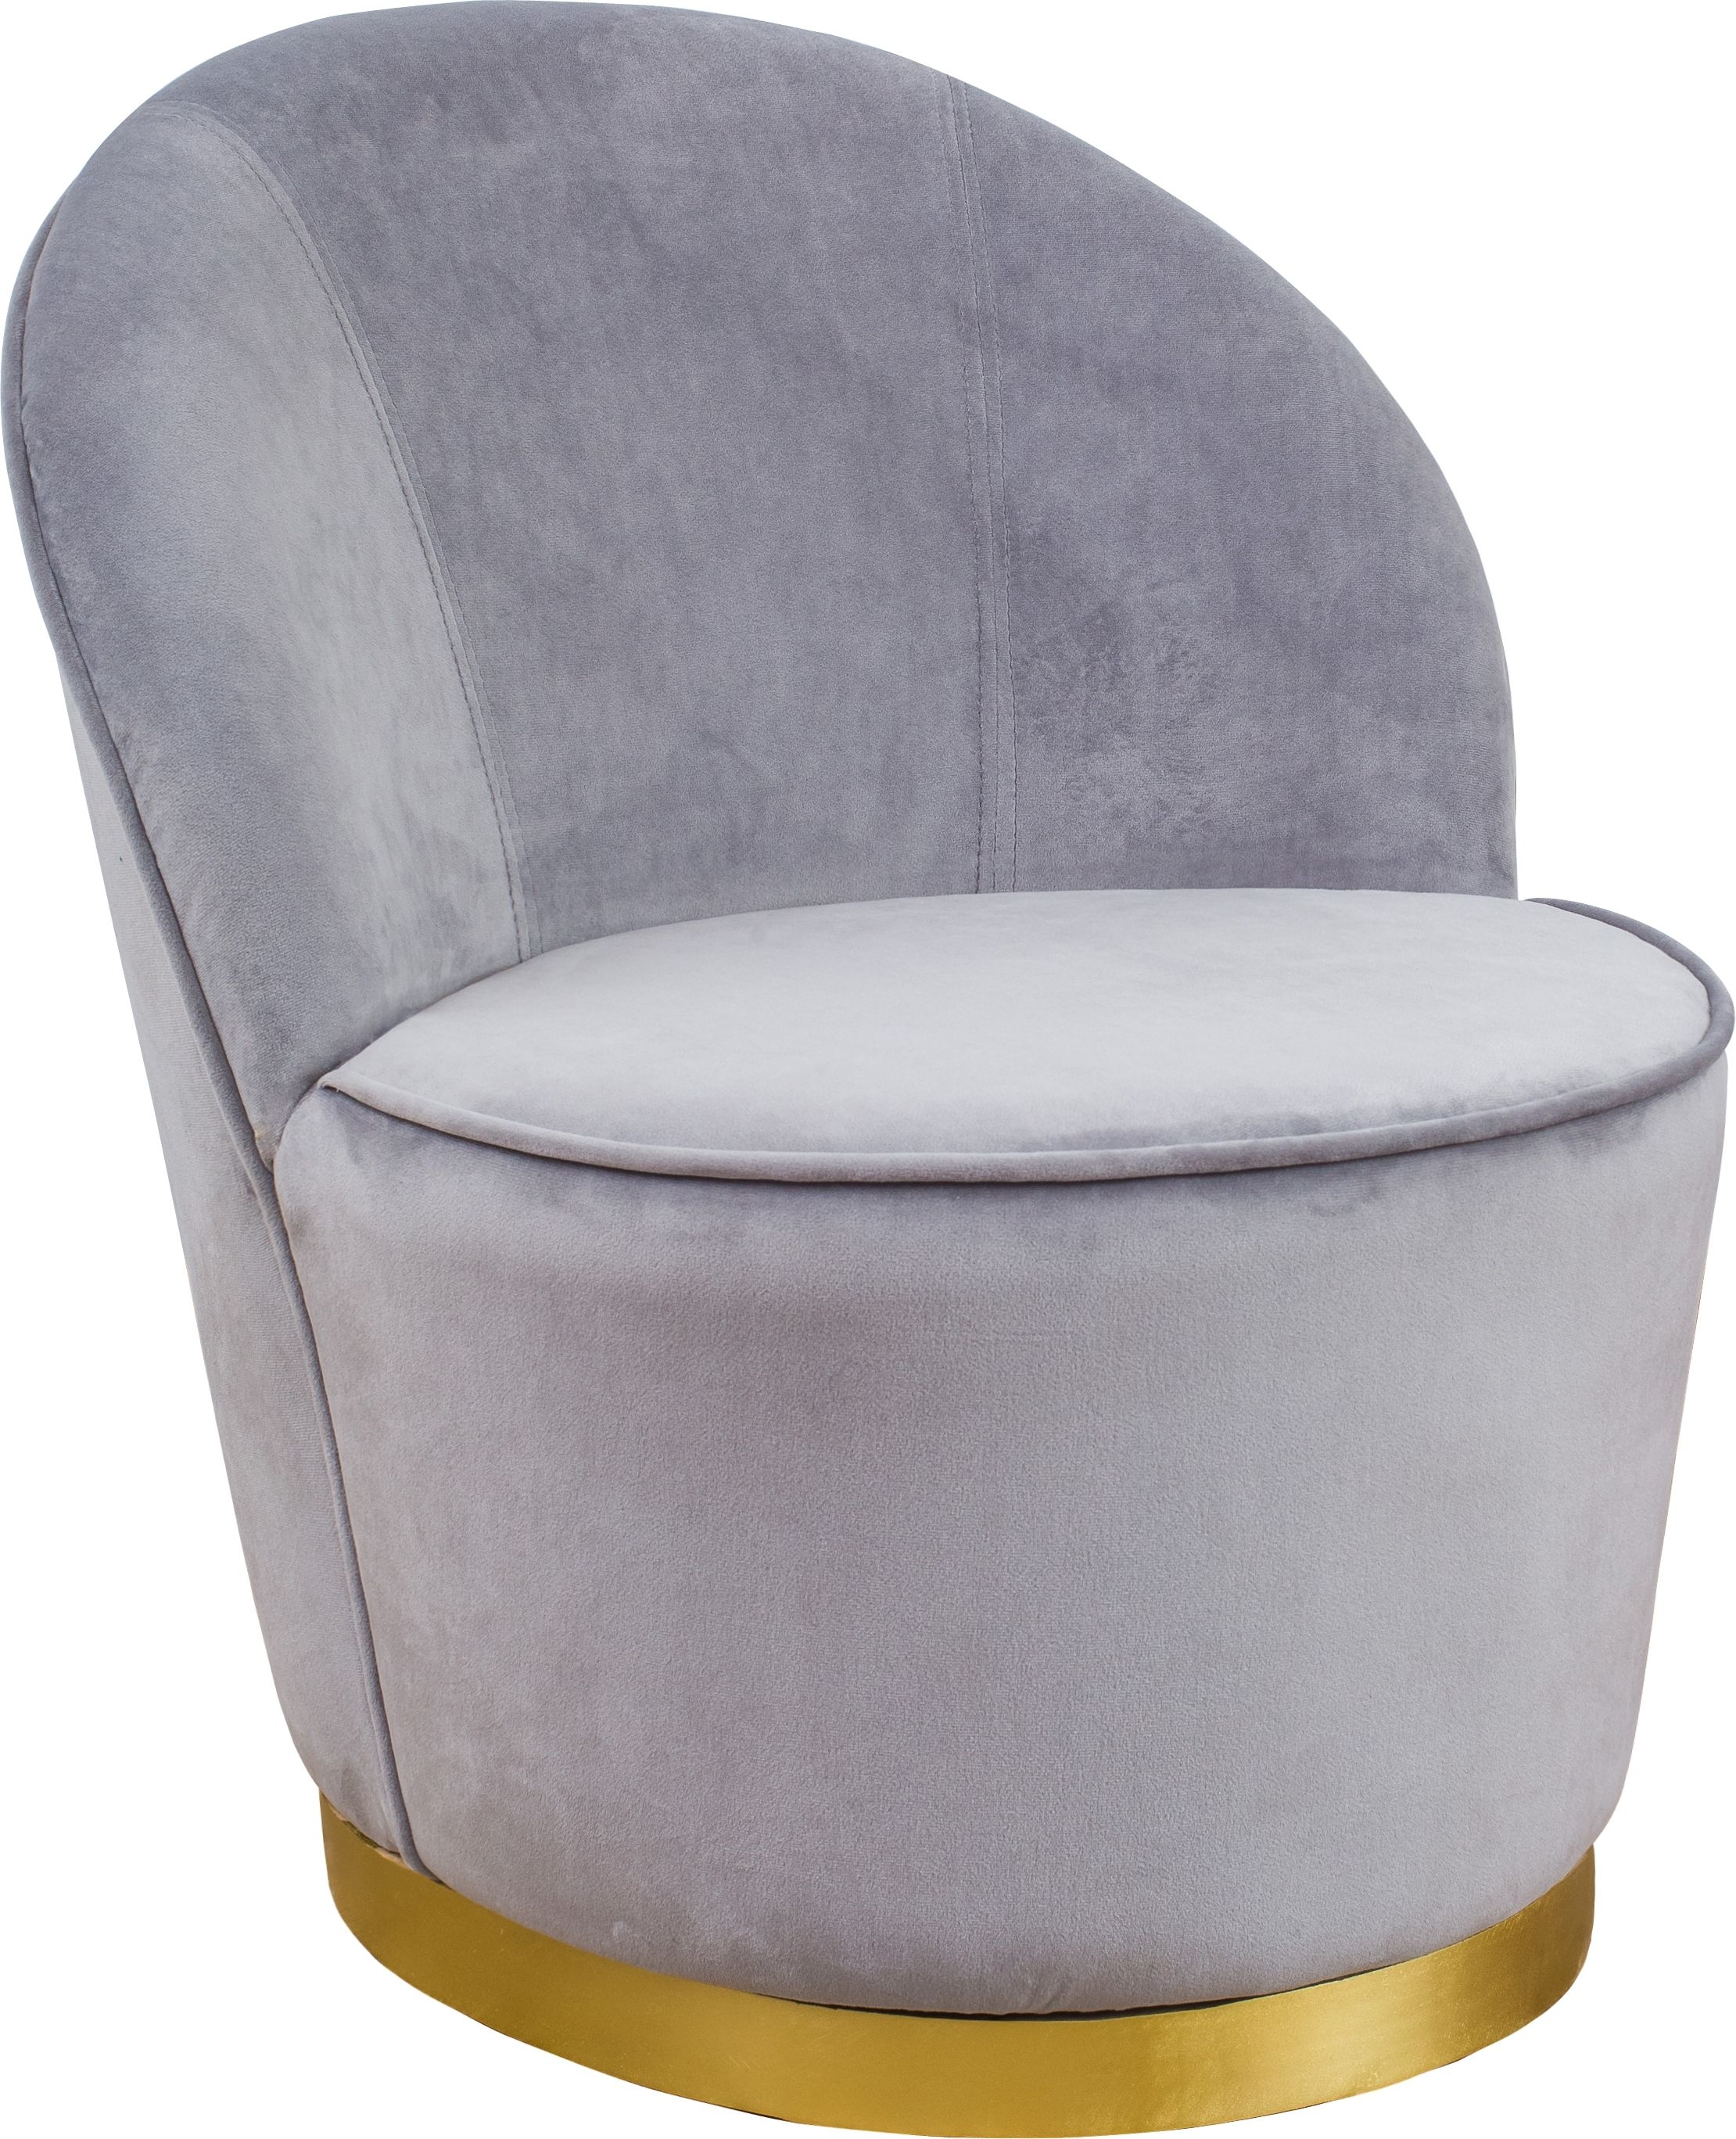 MC - Milana Chair, Grey - Image 0